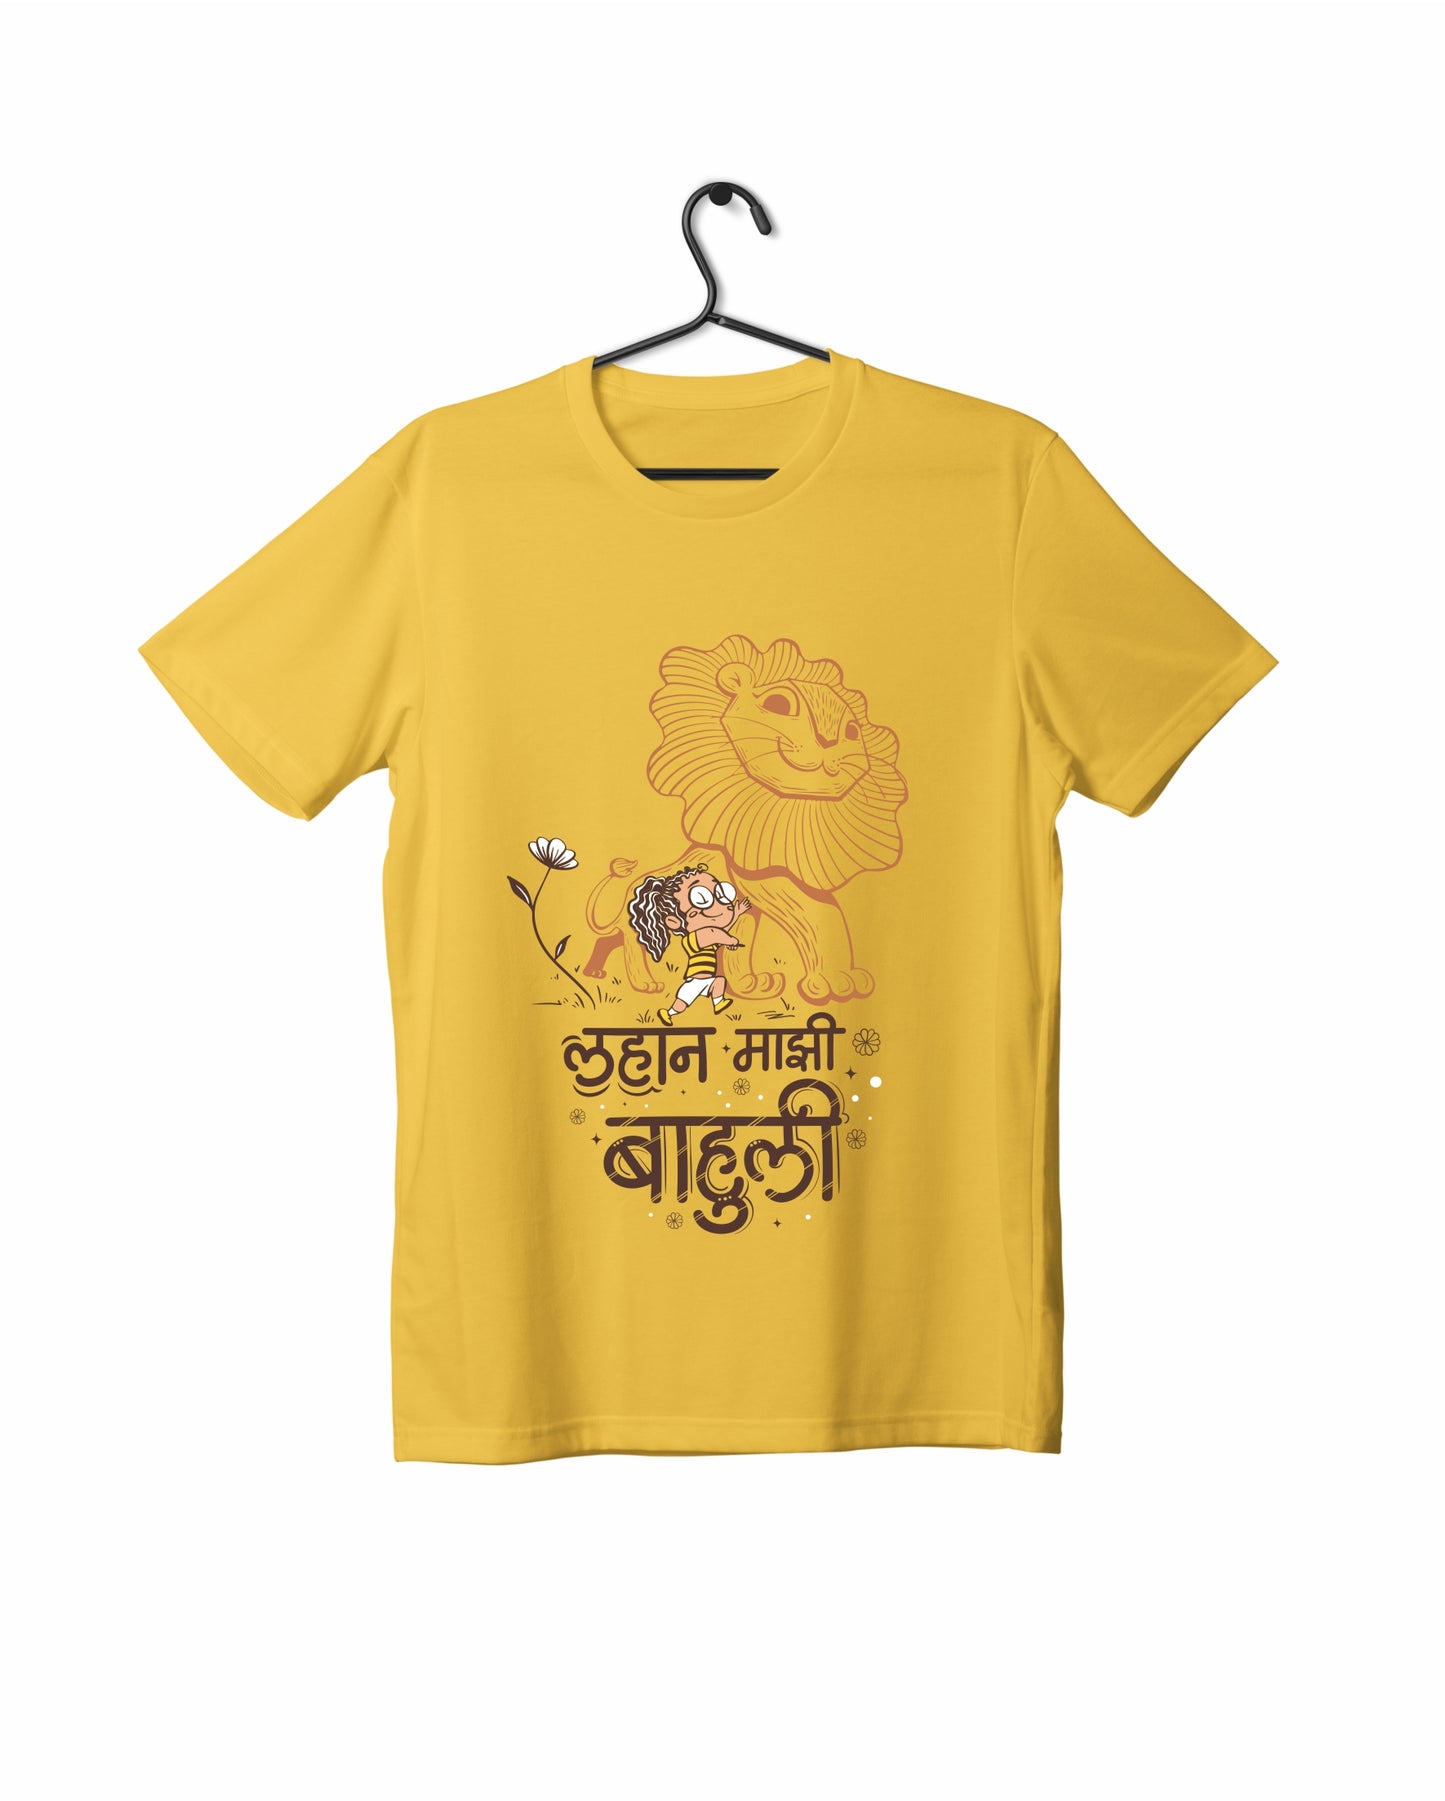 Lahan Majhi Bahuli - Lemon Yellow - Unisex Kids T-shirt